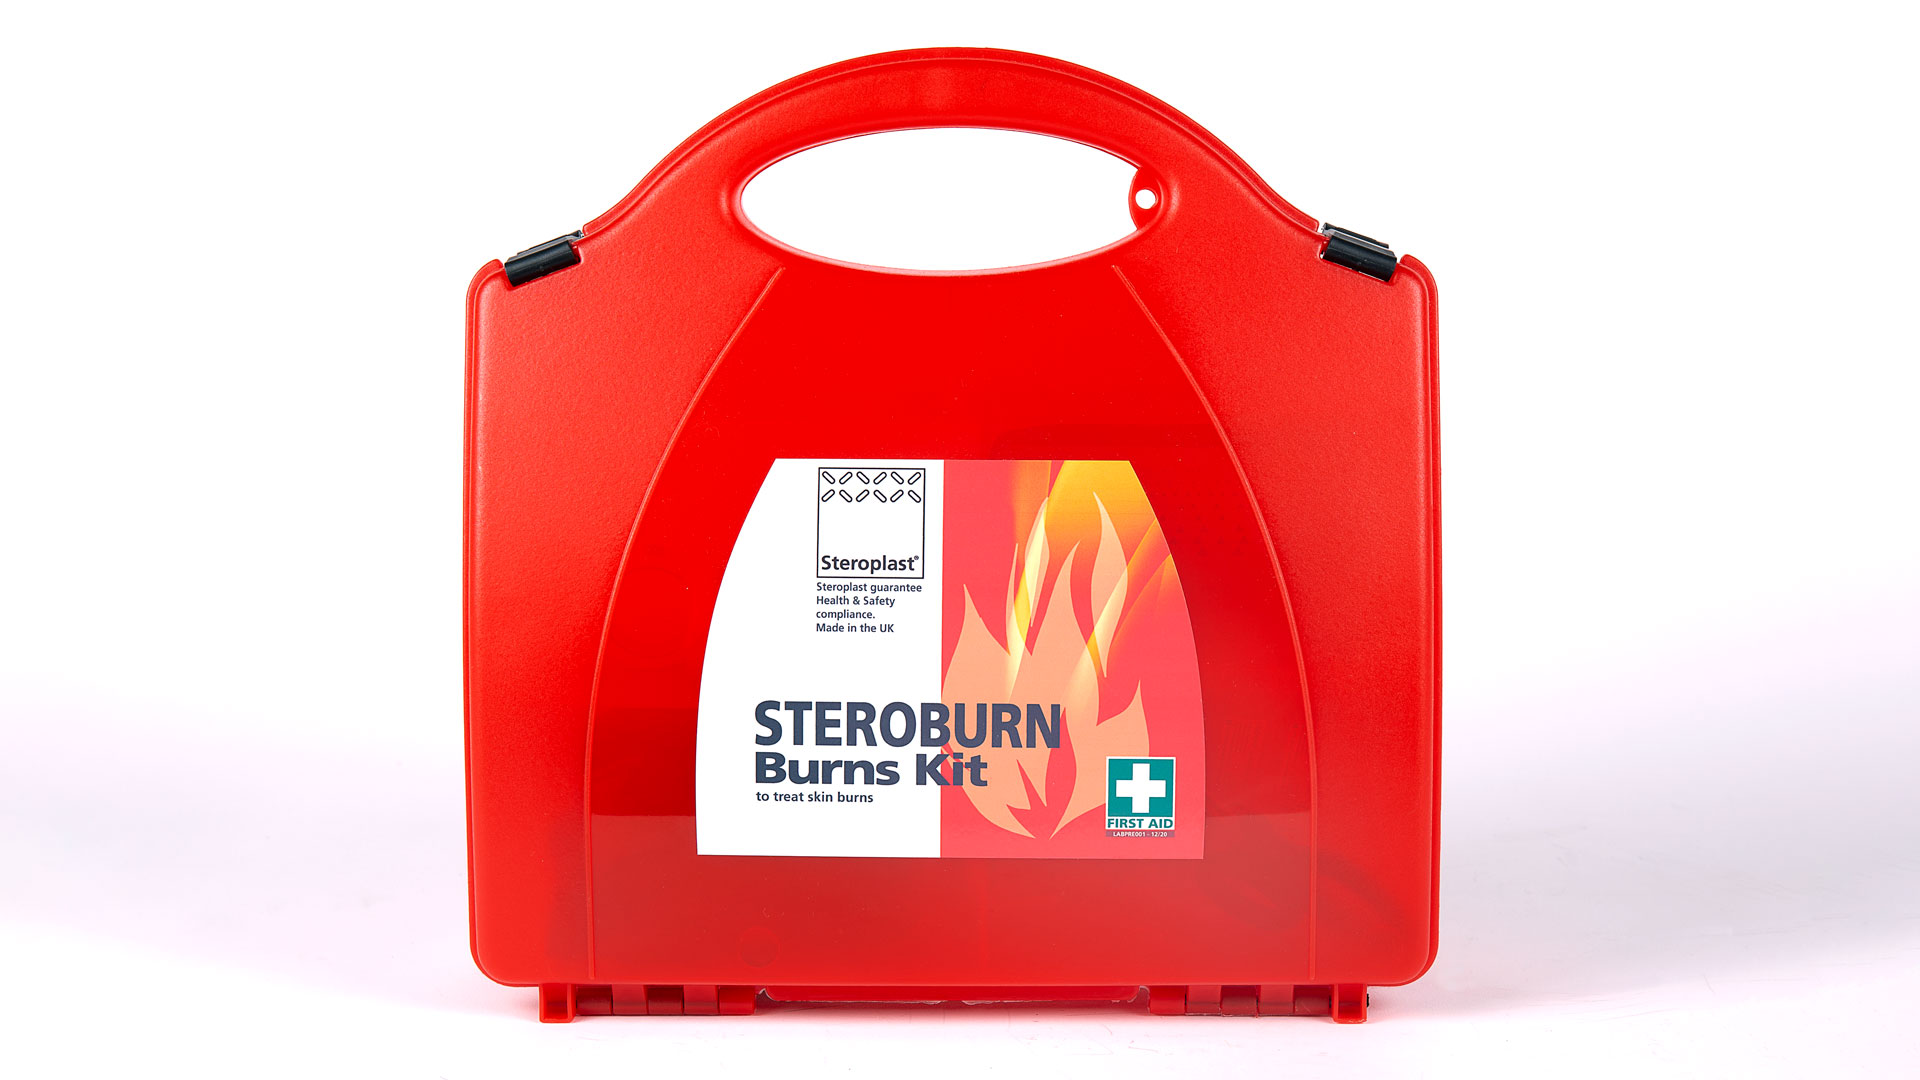 Premier Emergency Steroburn Burncare Kit | First Aid for Burns